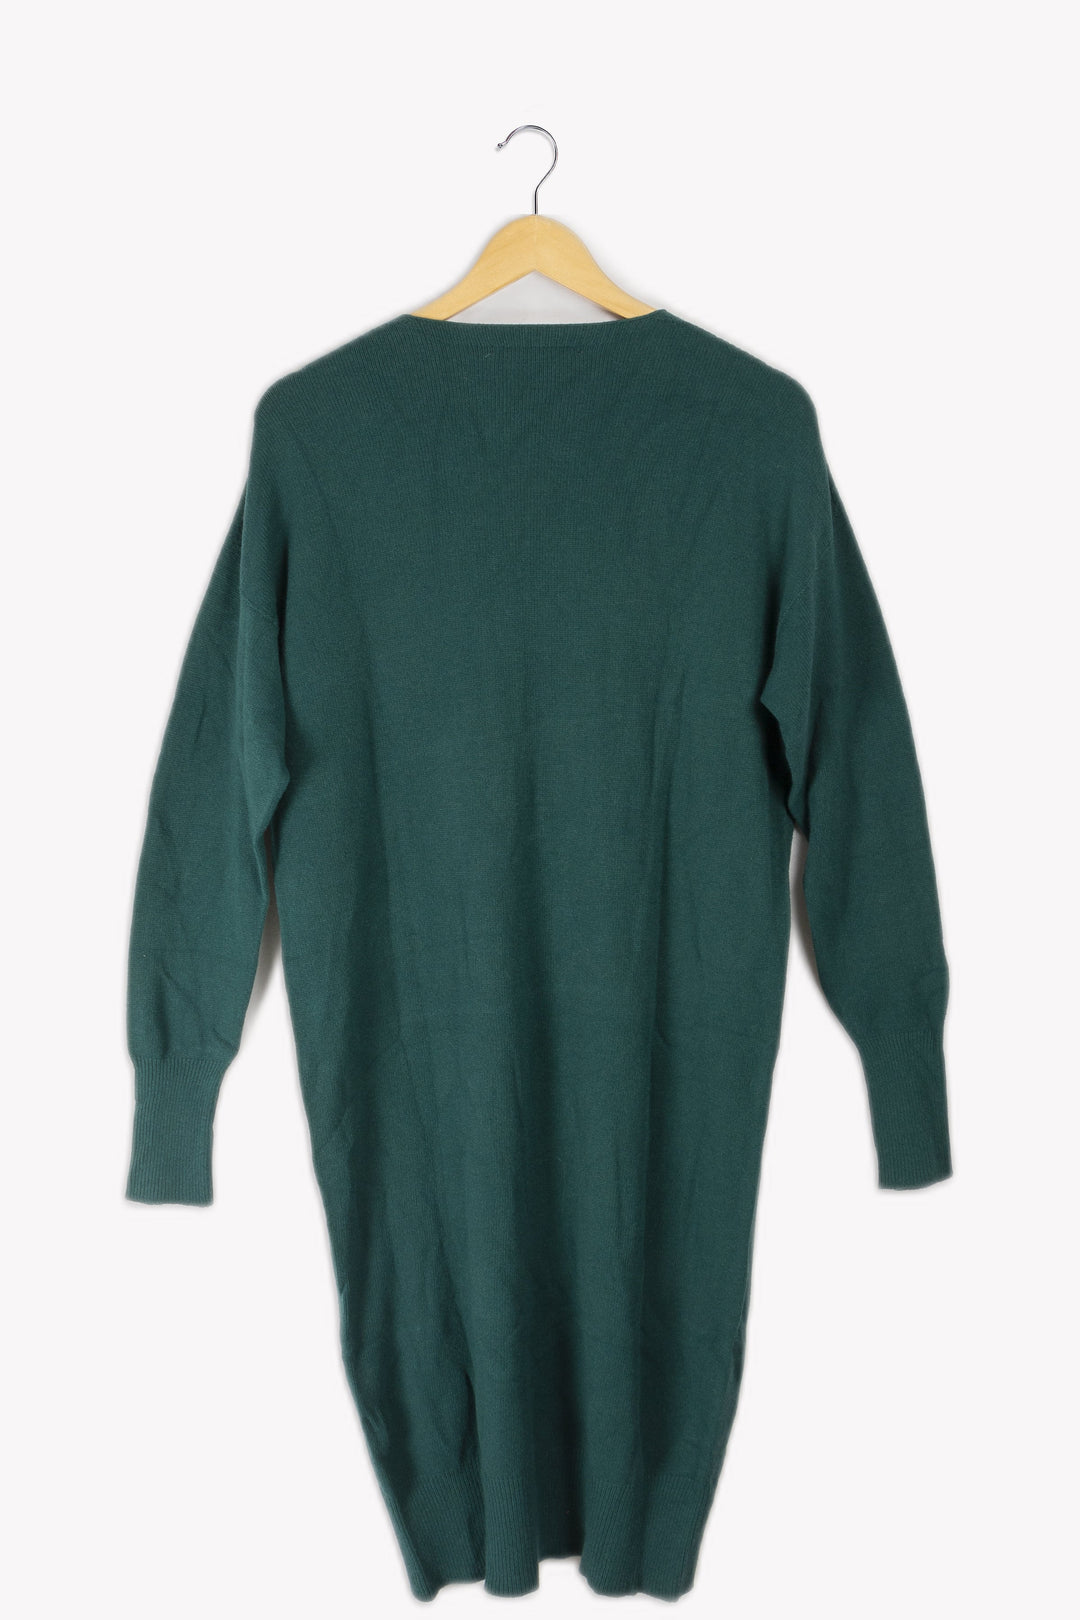 Green sweater dress - M